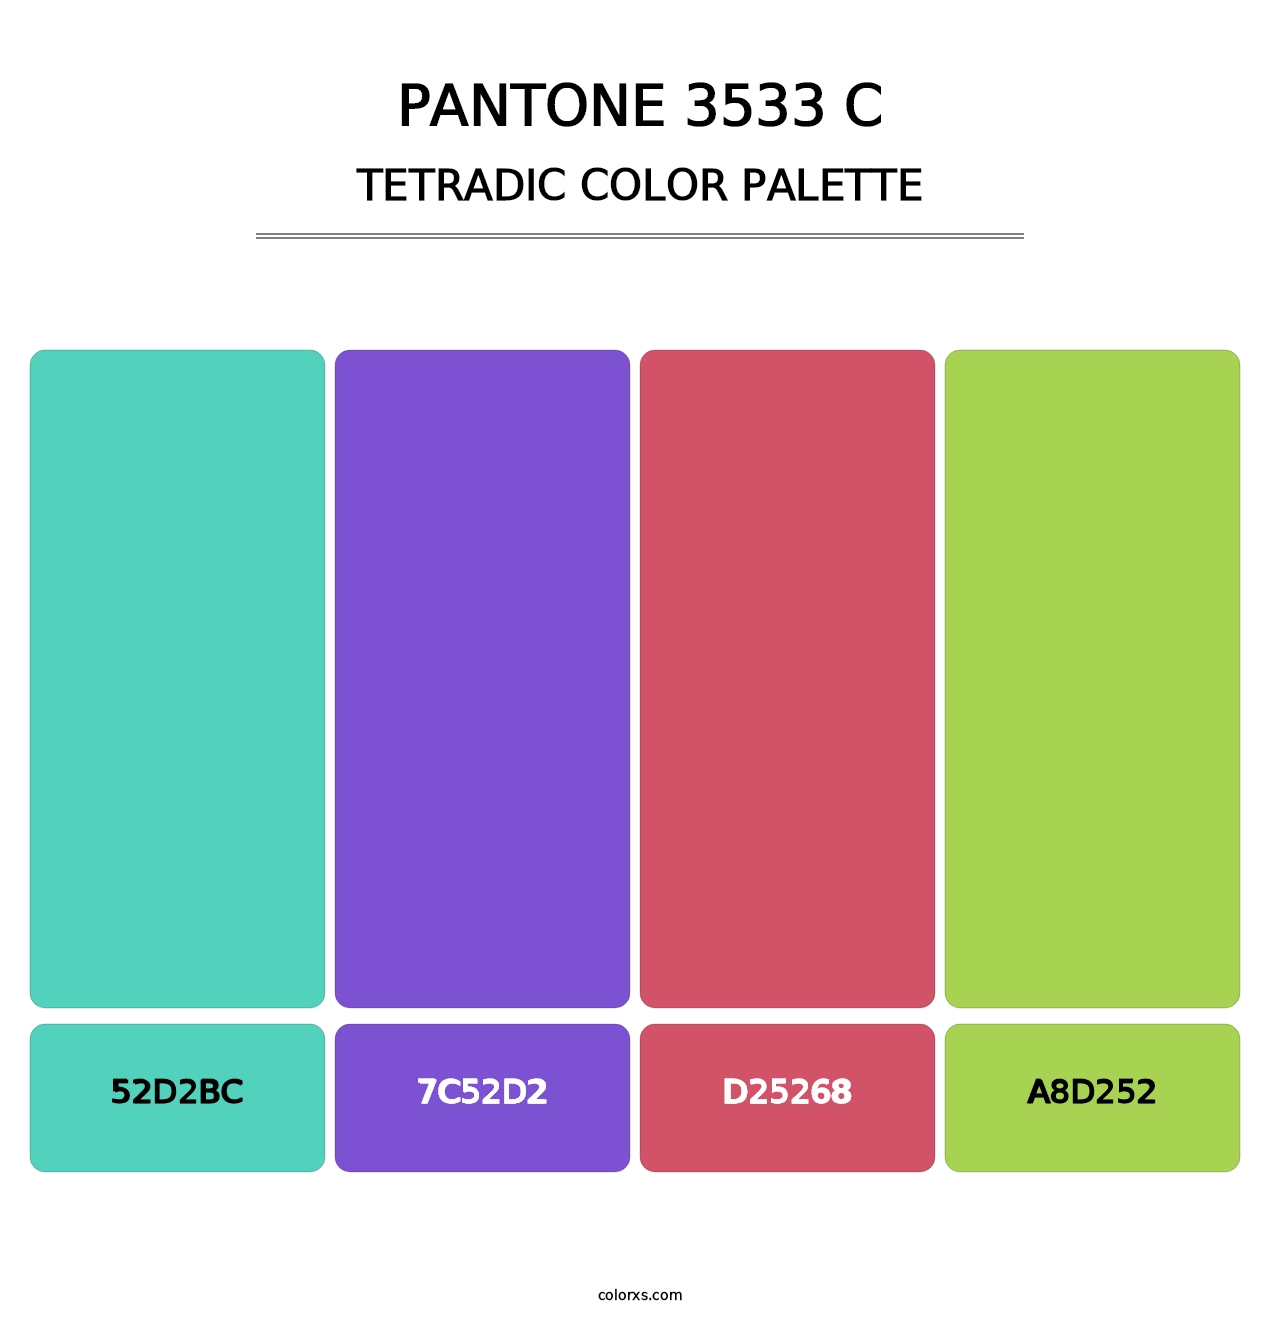 PANTONE 3533 C - Tetradic Color Palette